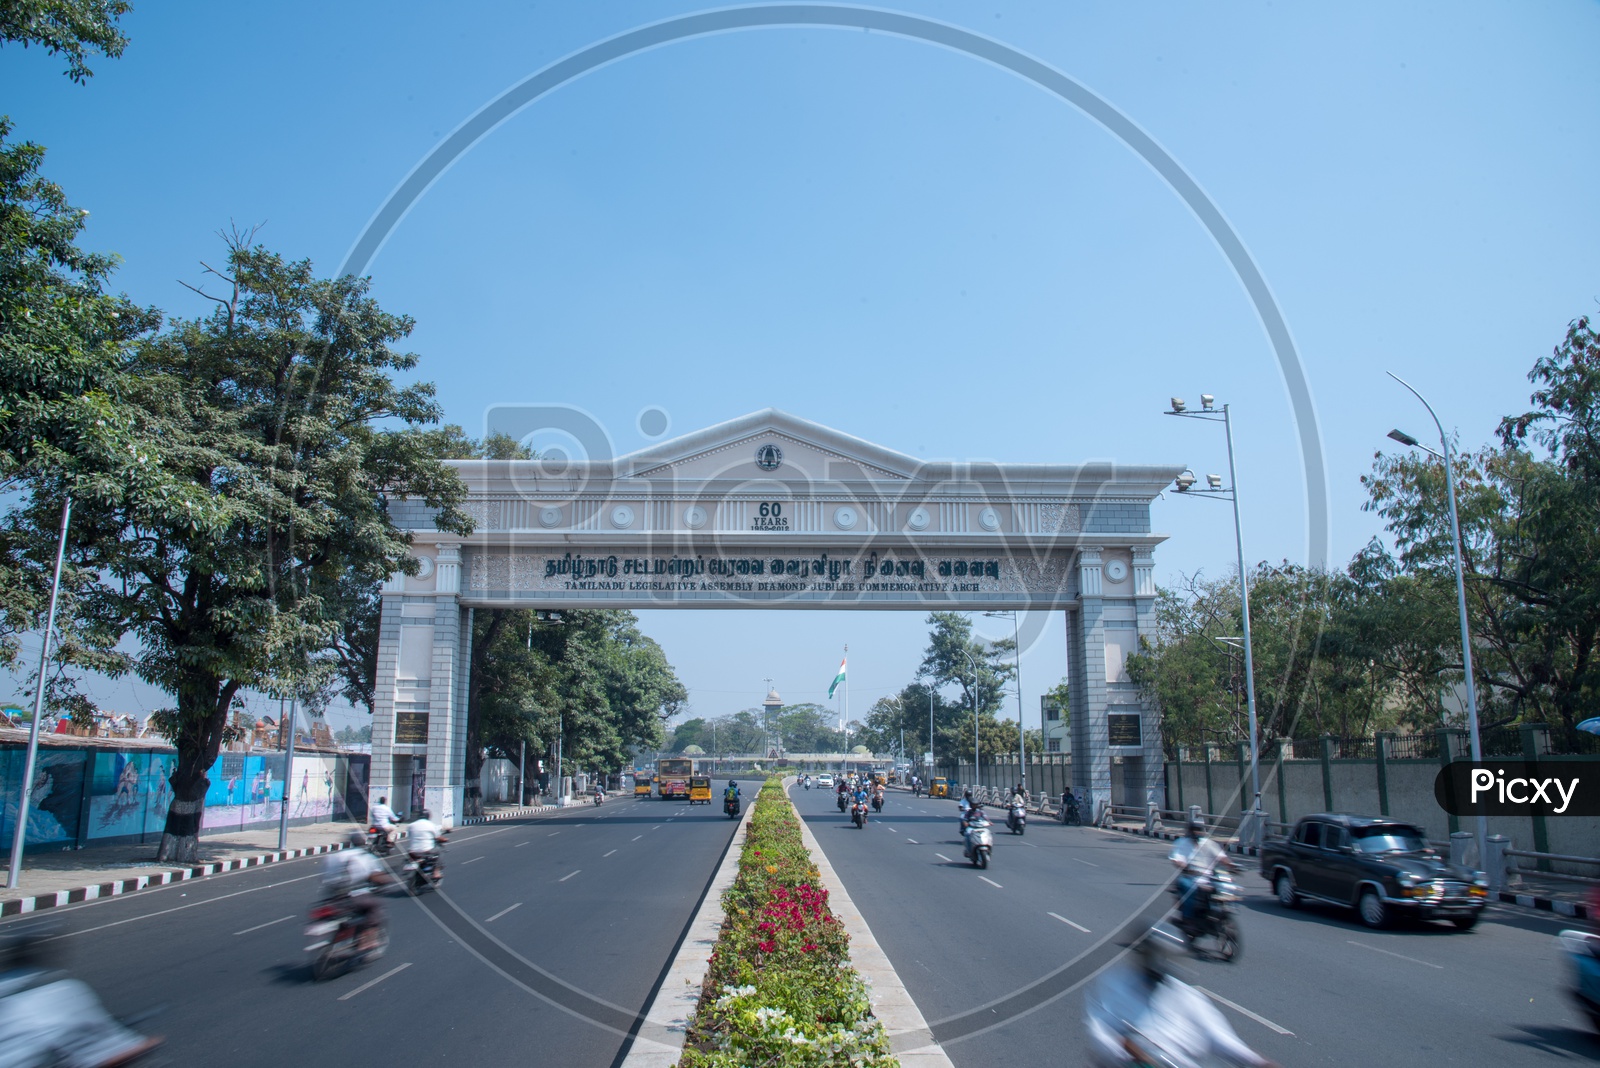 Tamil Nadu Assembly Entrance road.